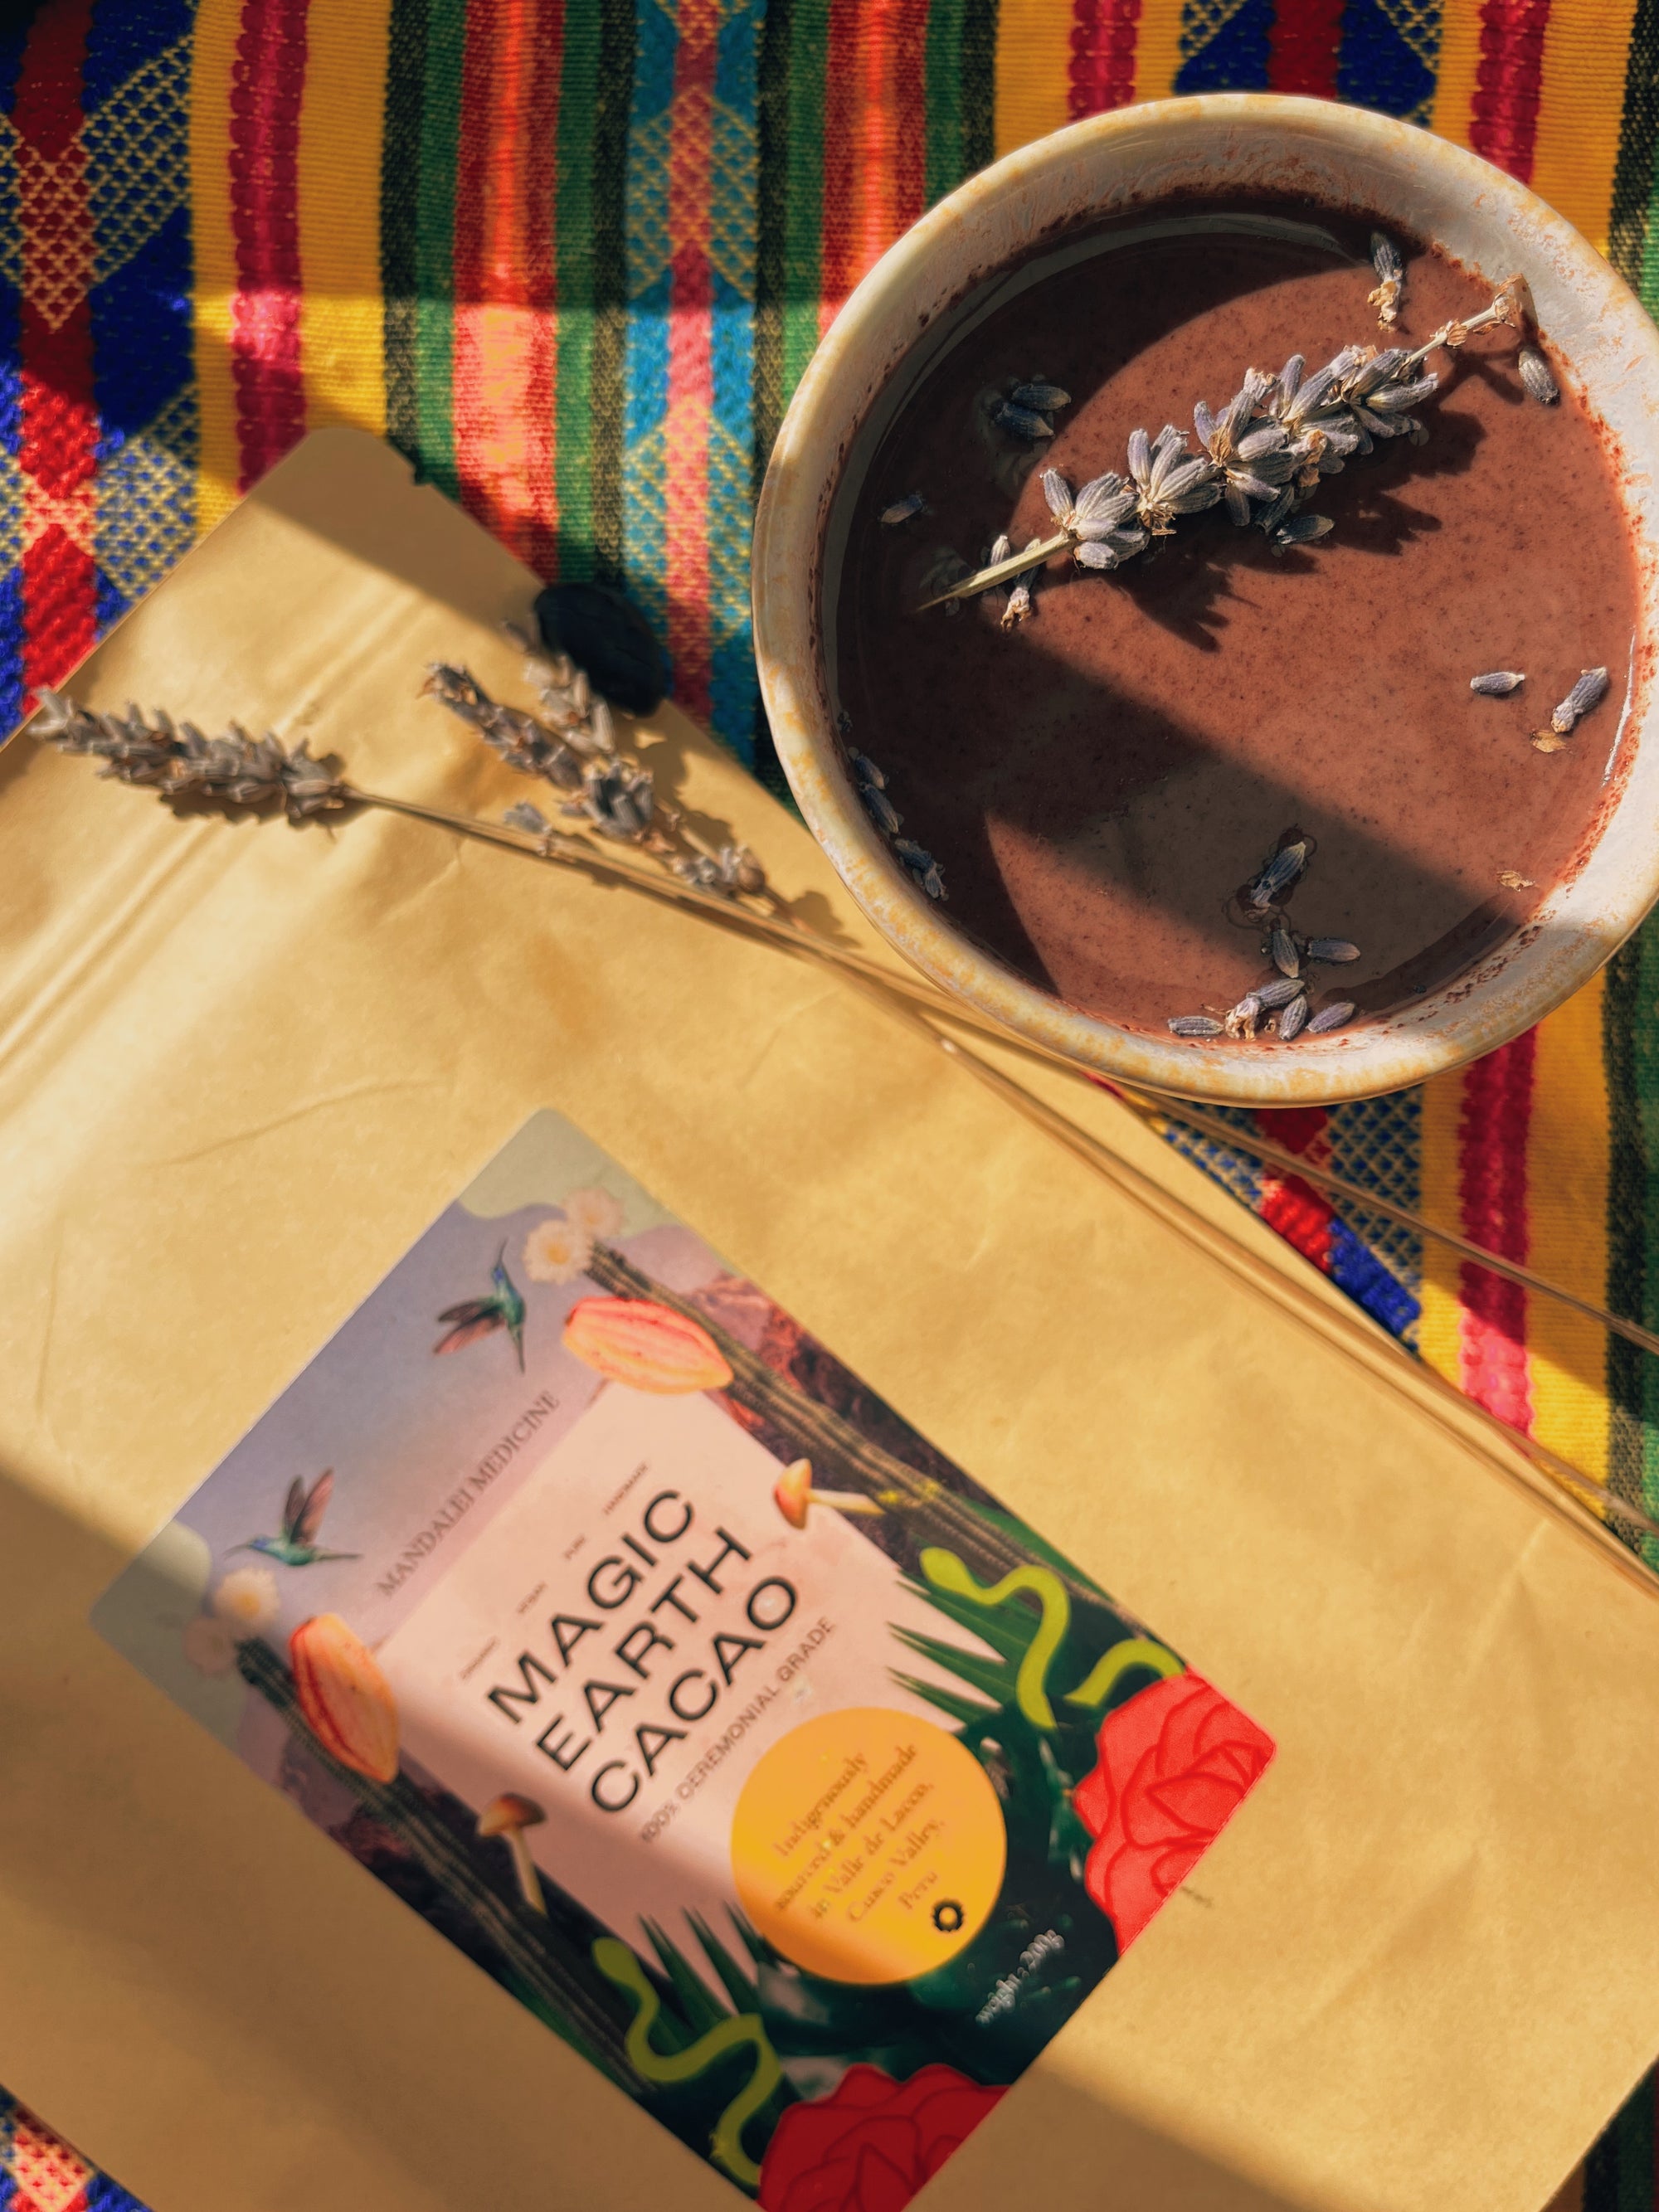 Magic Earth Peruvian Ceremonial Cacao